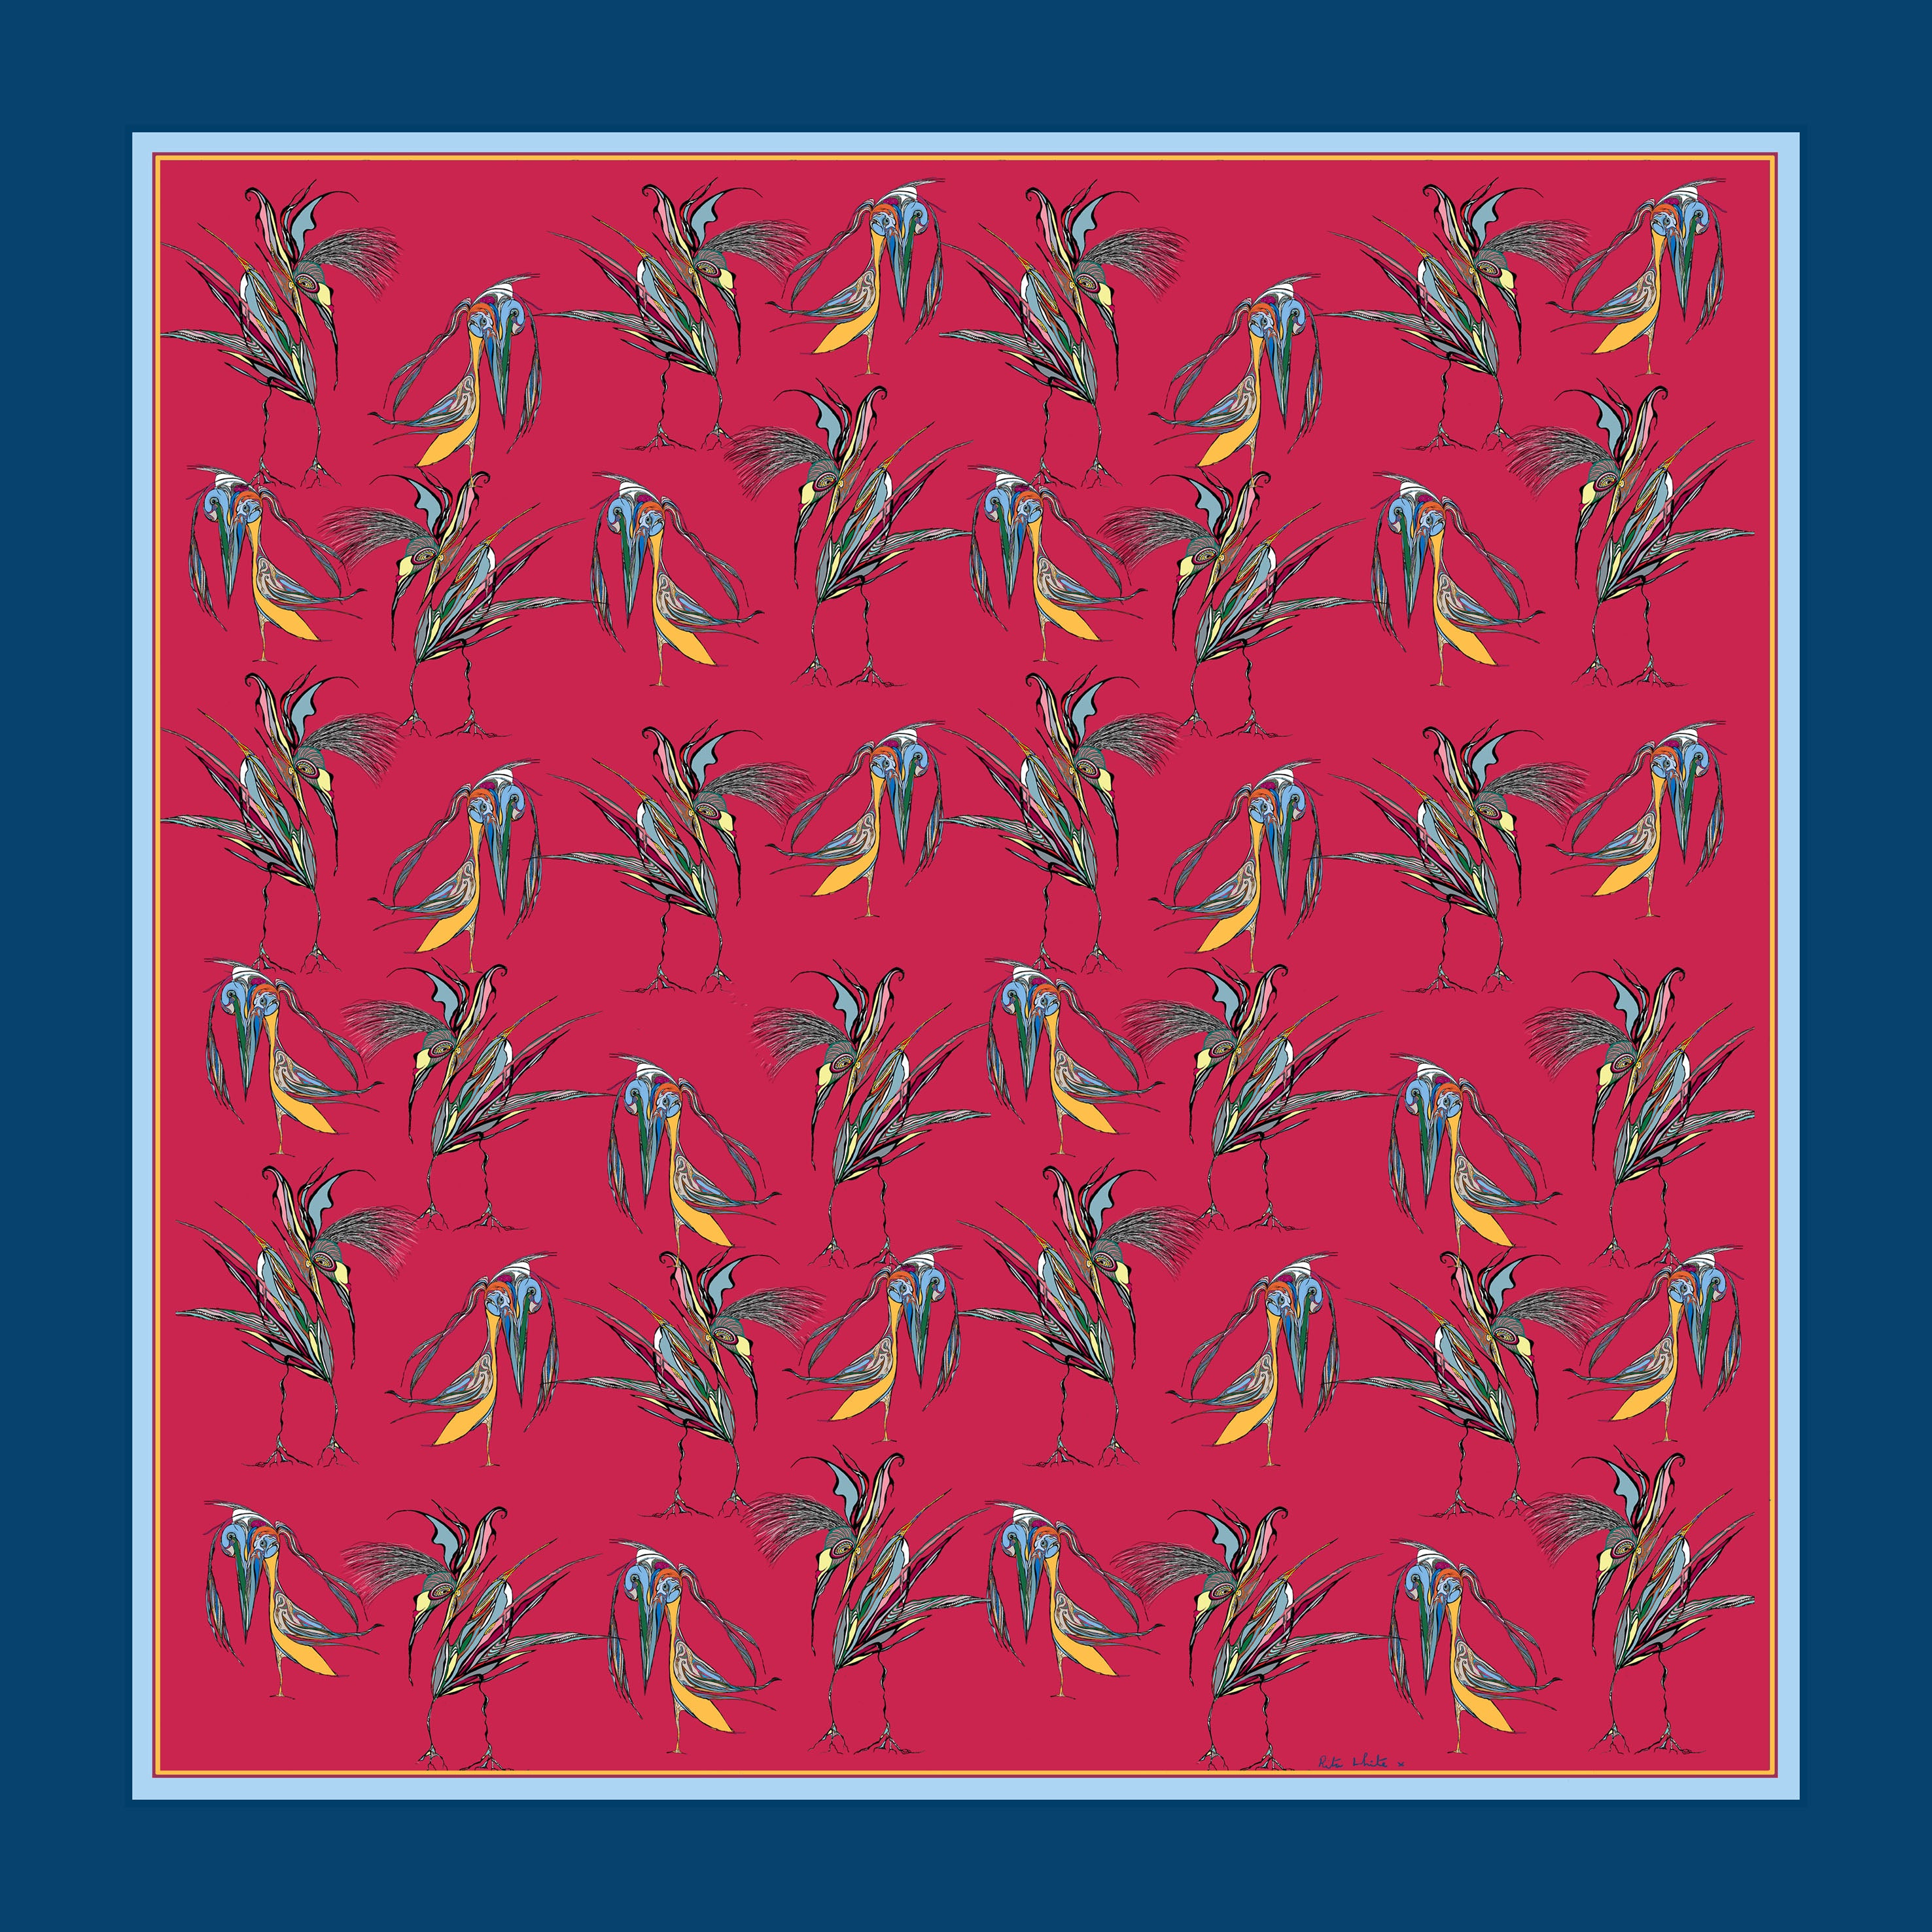 100% Silk Pocket Square in Red Birds Pattern